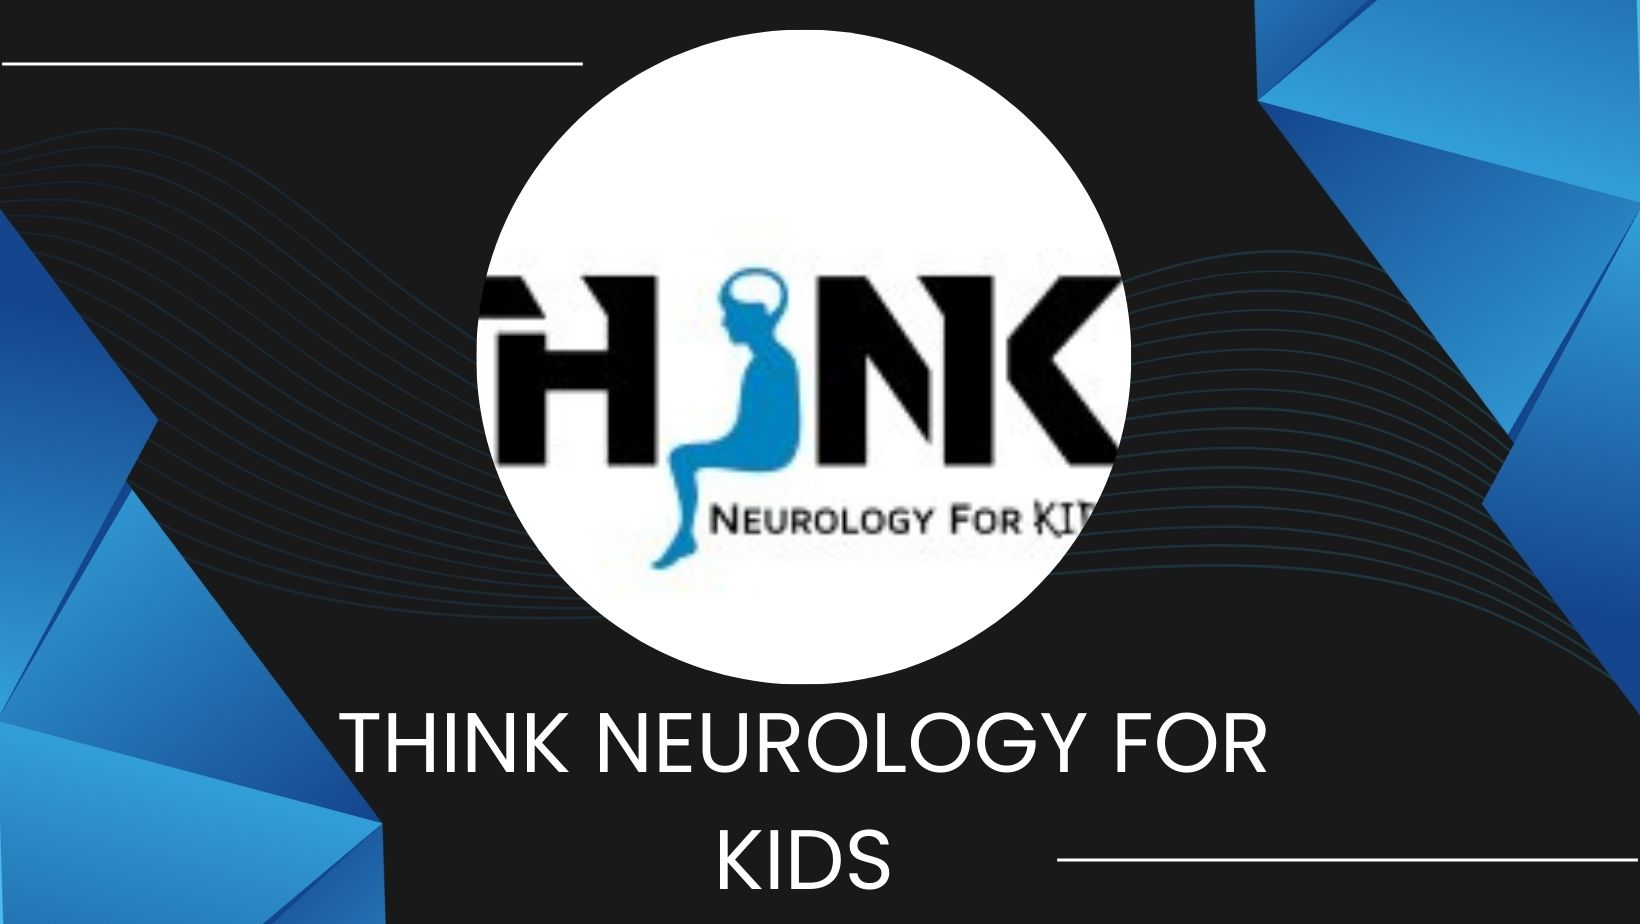 THINK Neurology